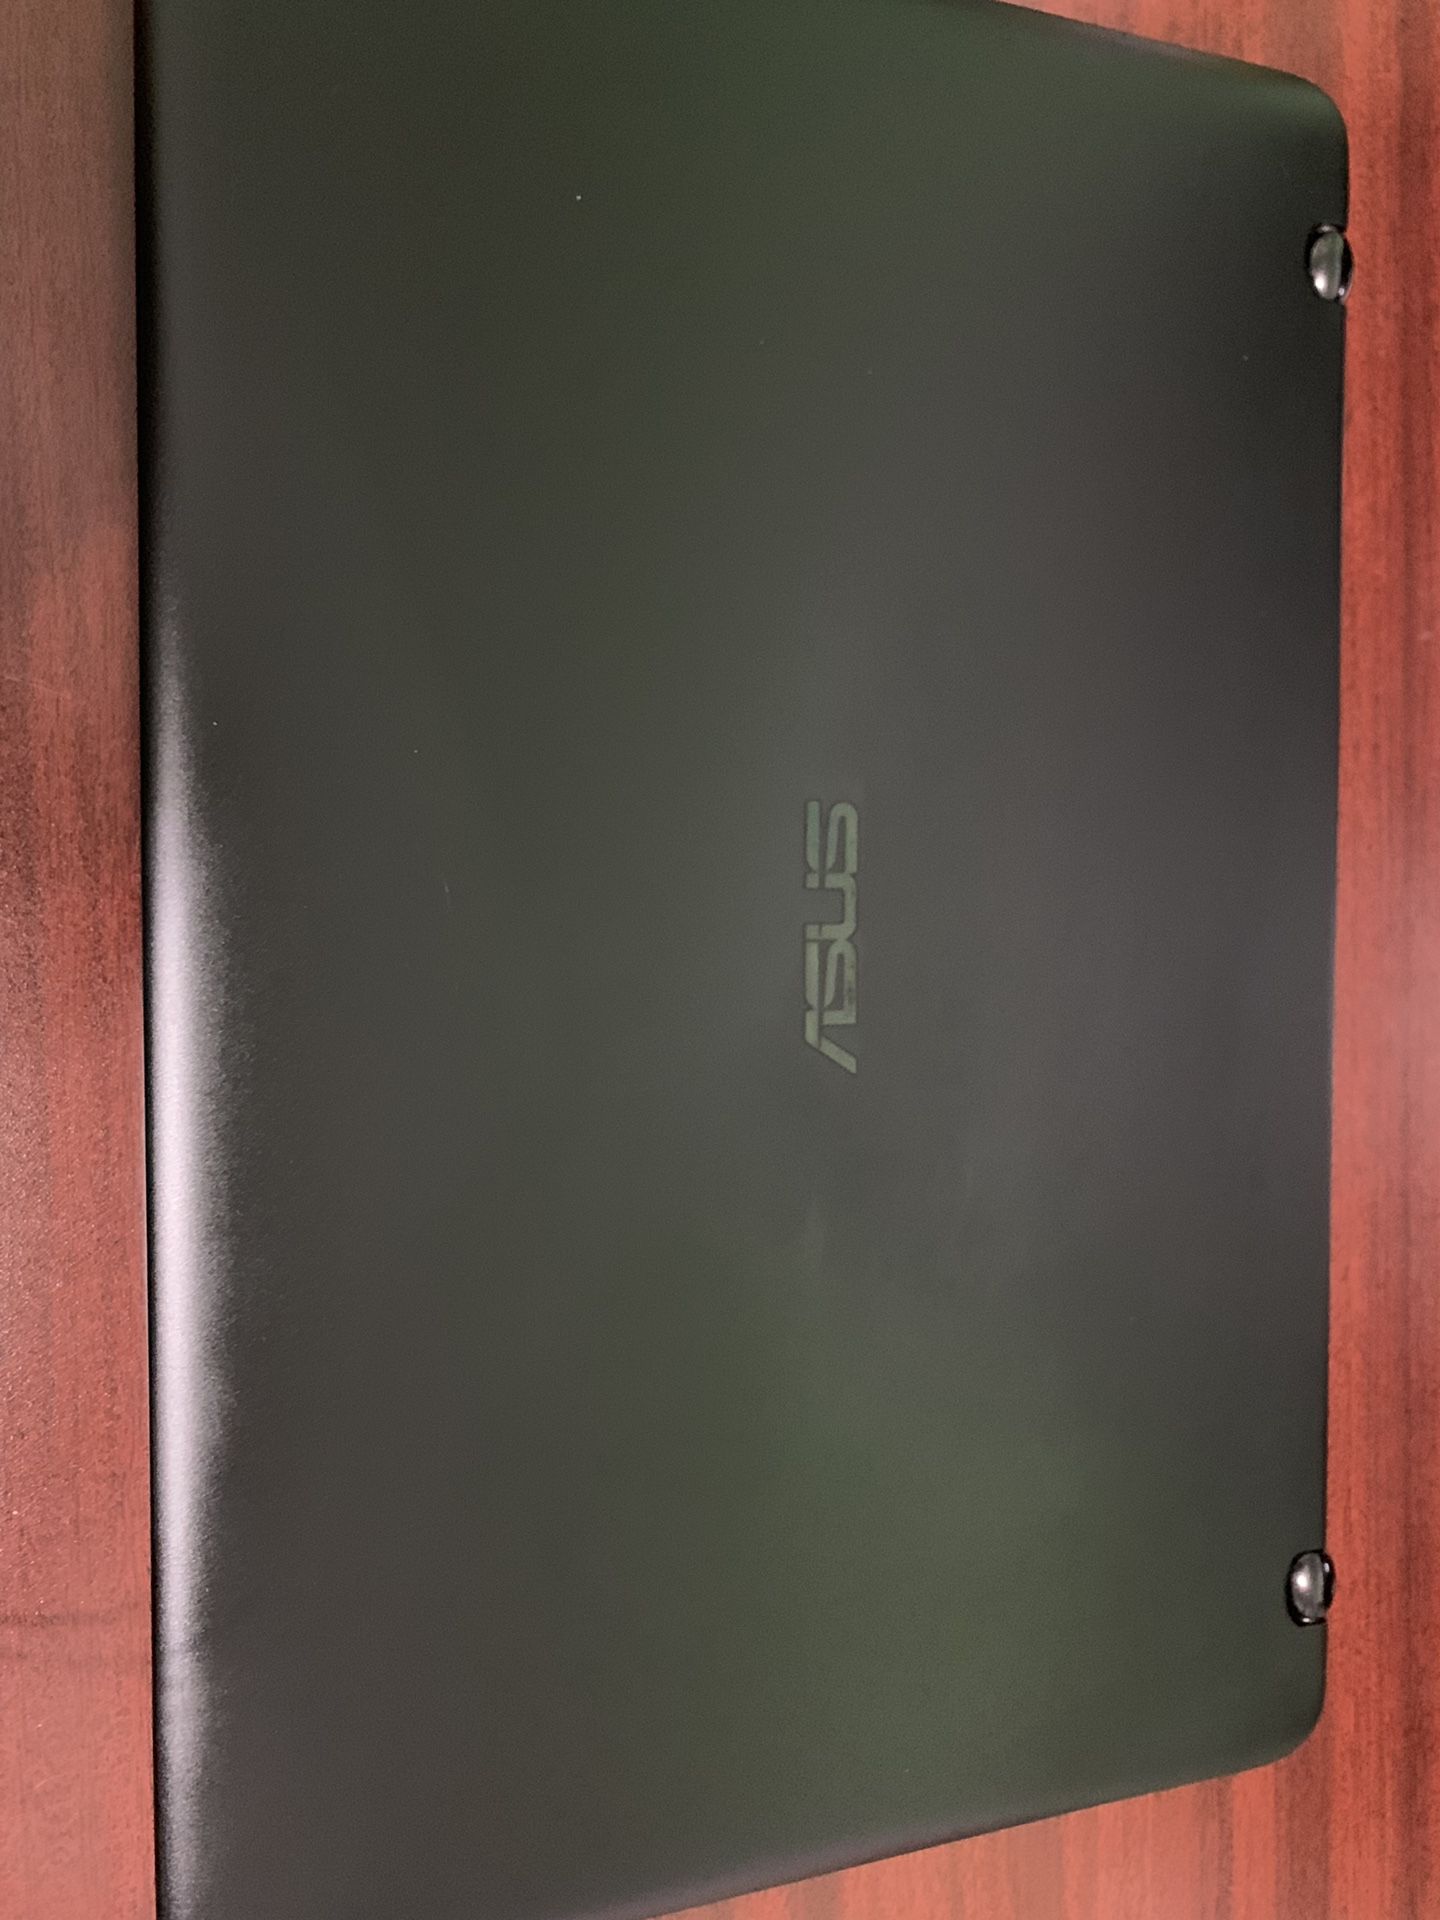 Asus 2-in-1 Laptop